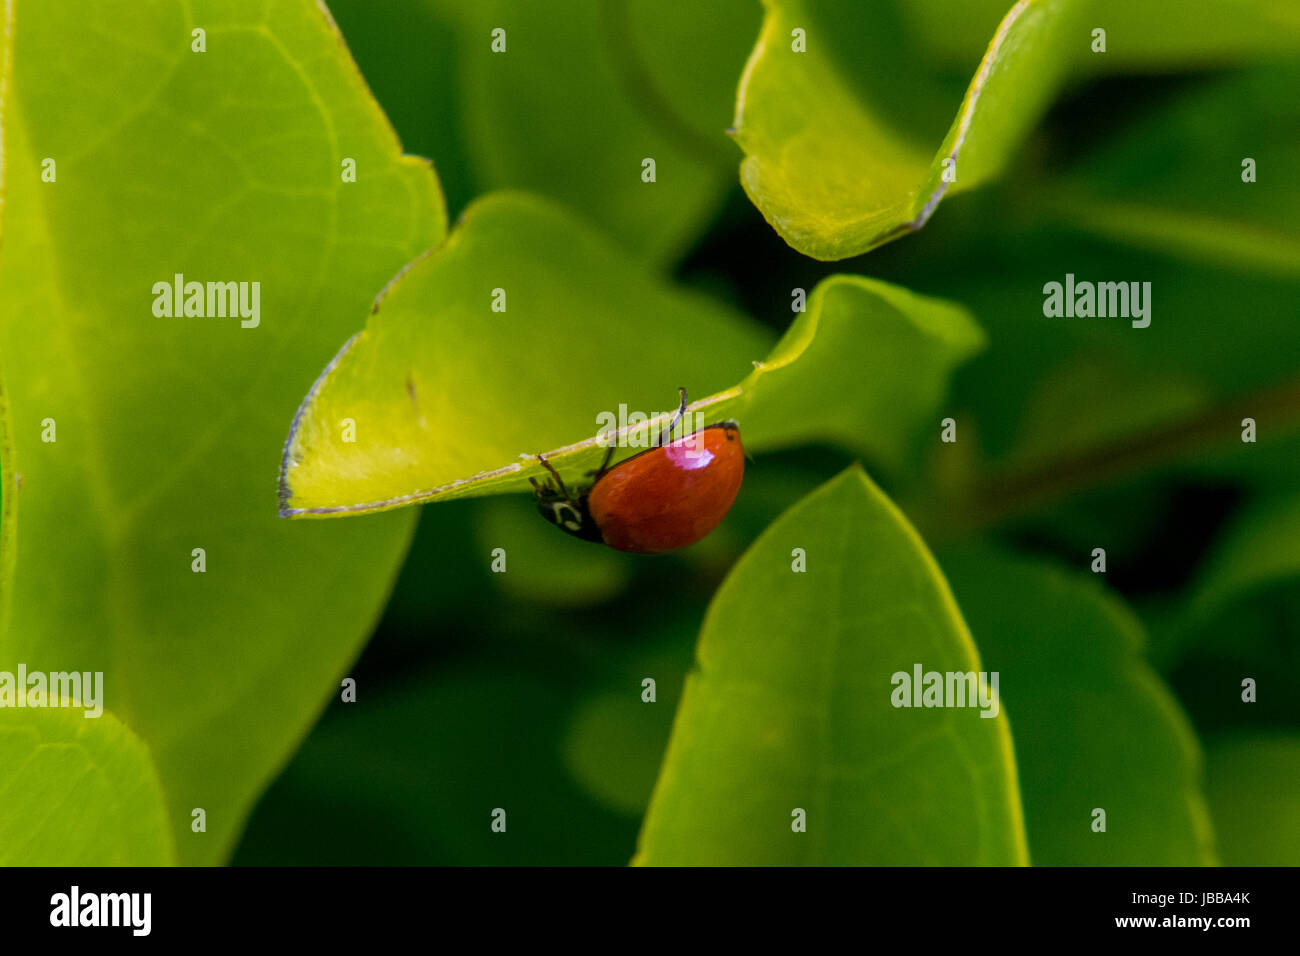 Little brown ladybug walking around some leaves Stock Photo